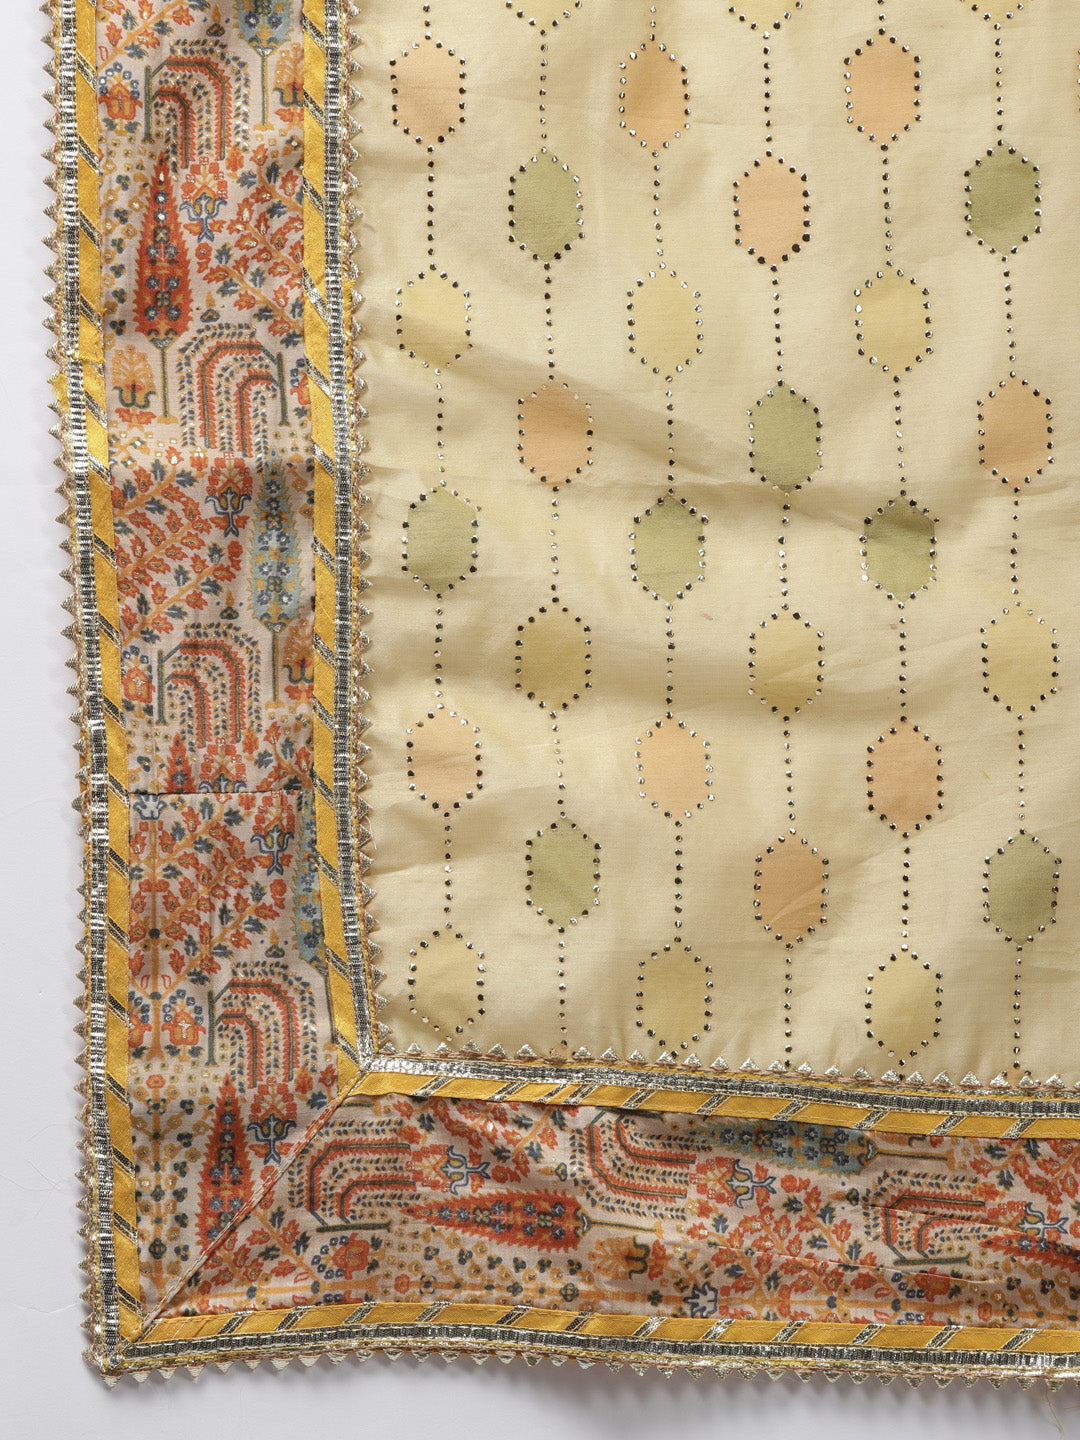 Ishin Women's Silk Blend Beige Embroidered A-Line Kurta Sharara Dupatta Set